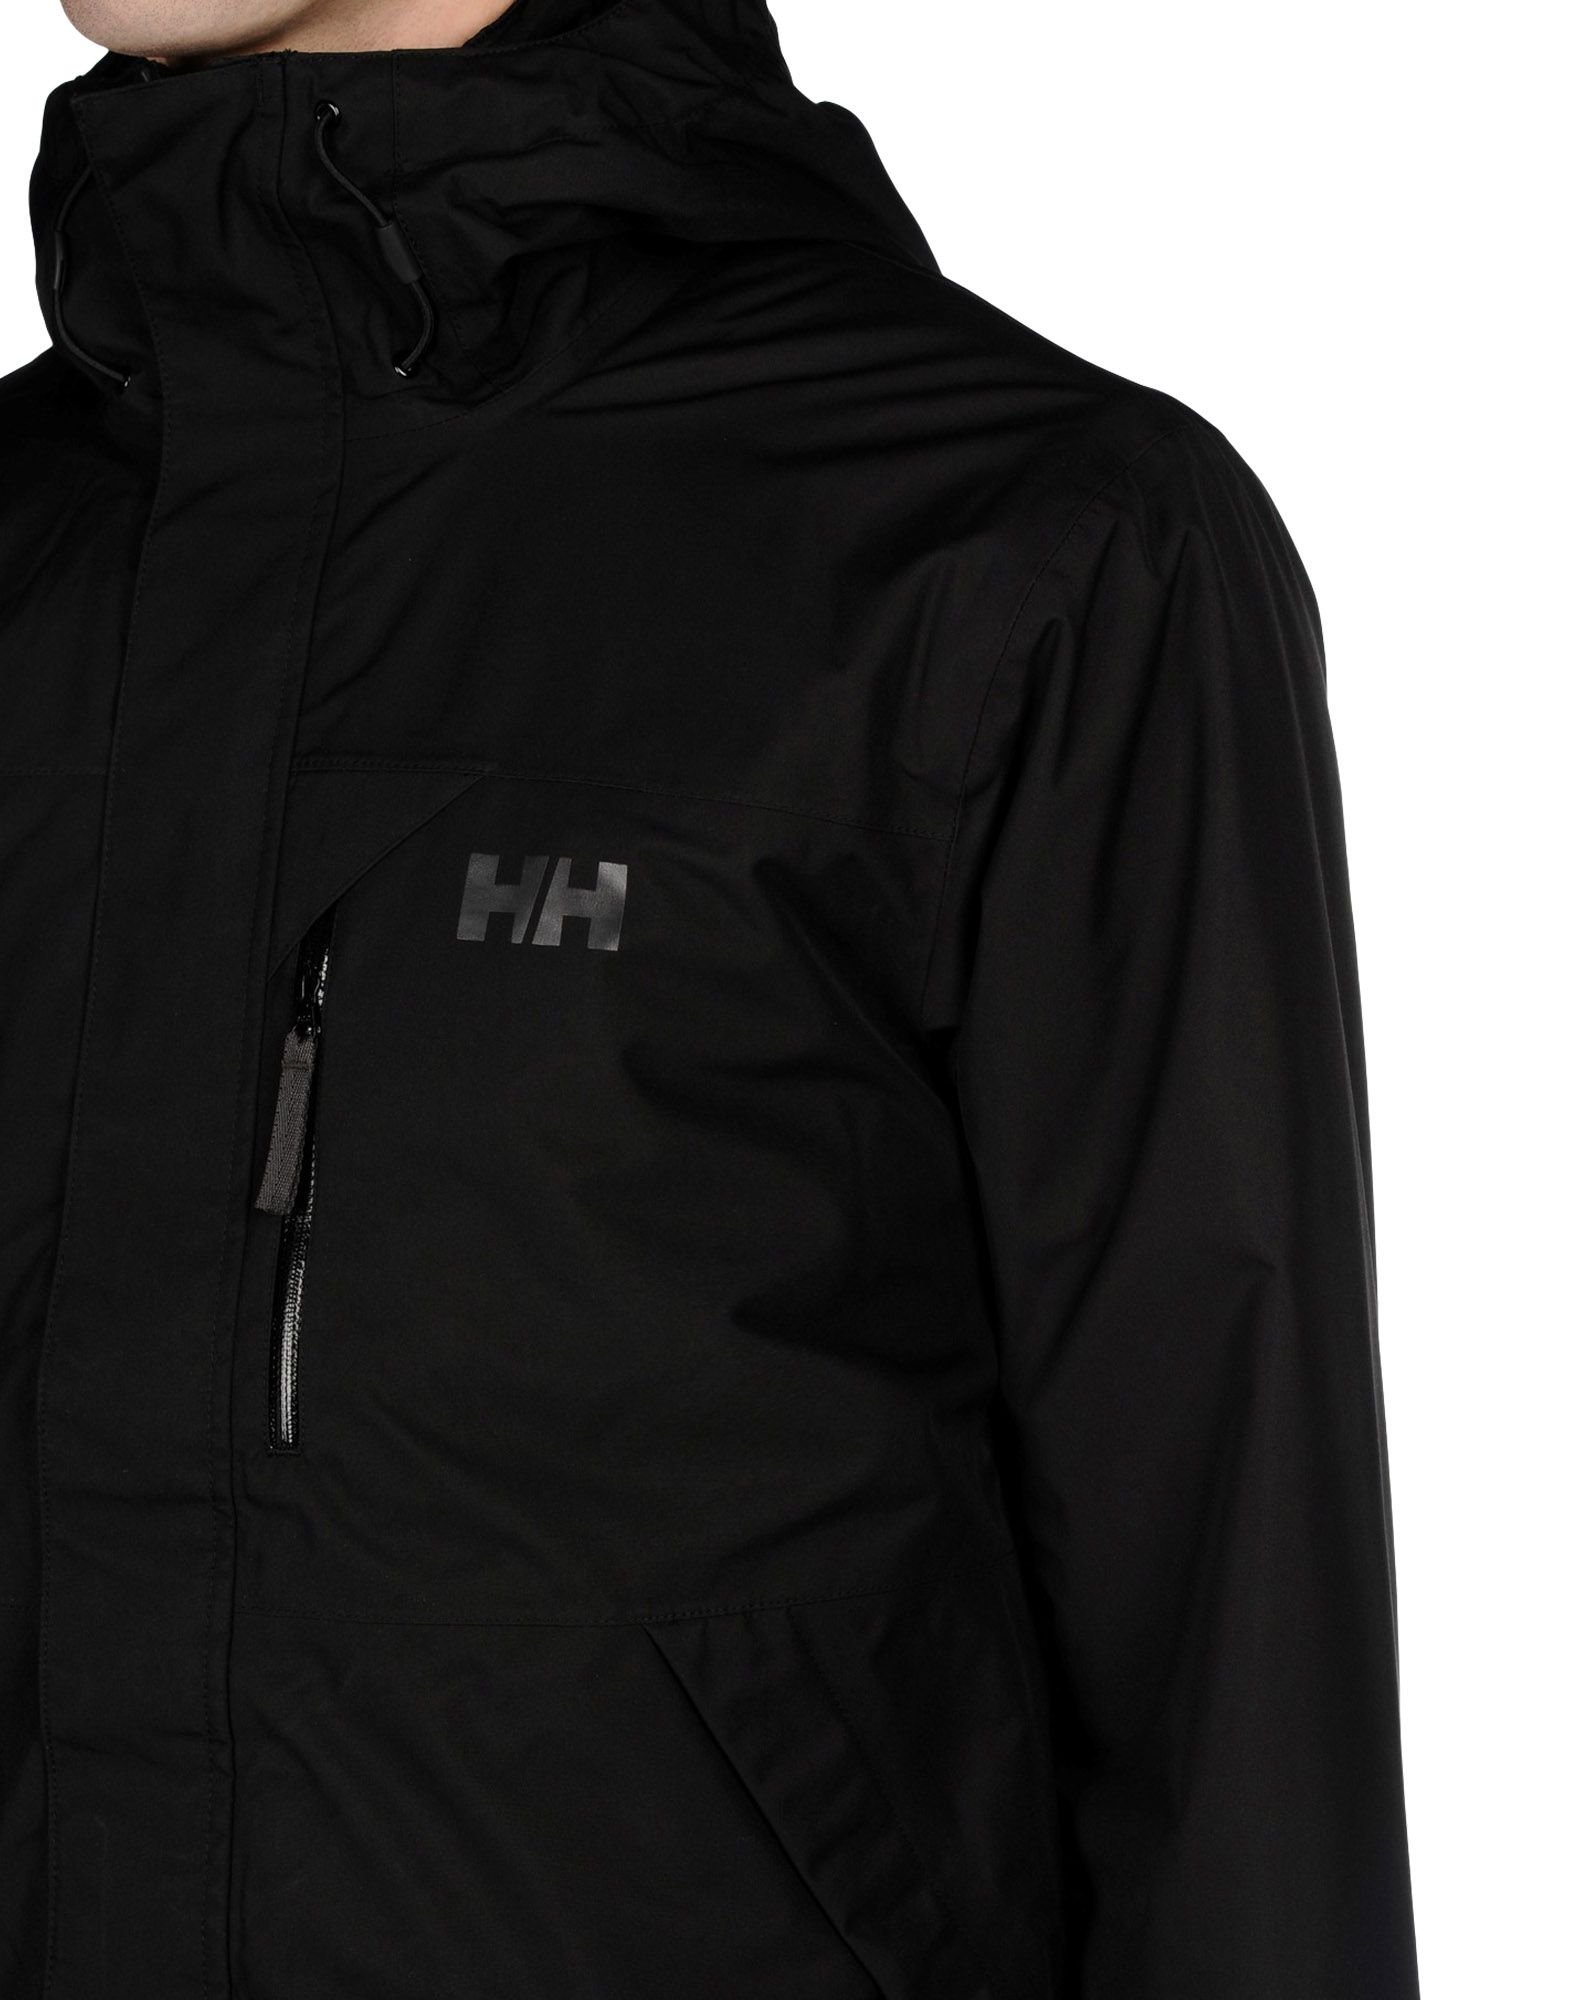 Lyst - Helly Hansen Jacket in Black for Men